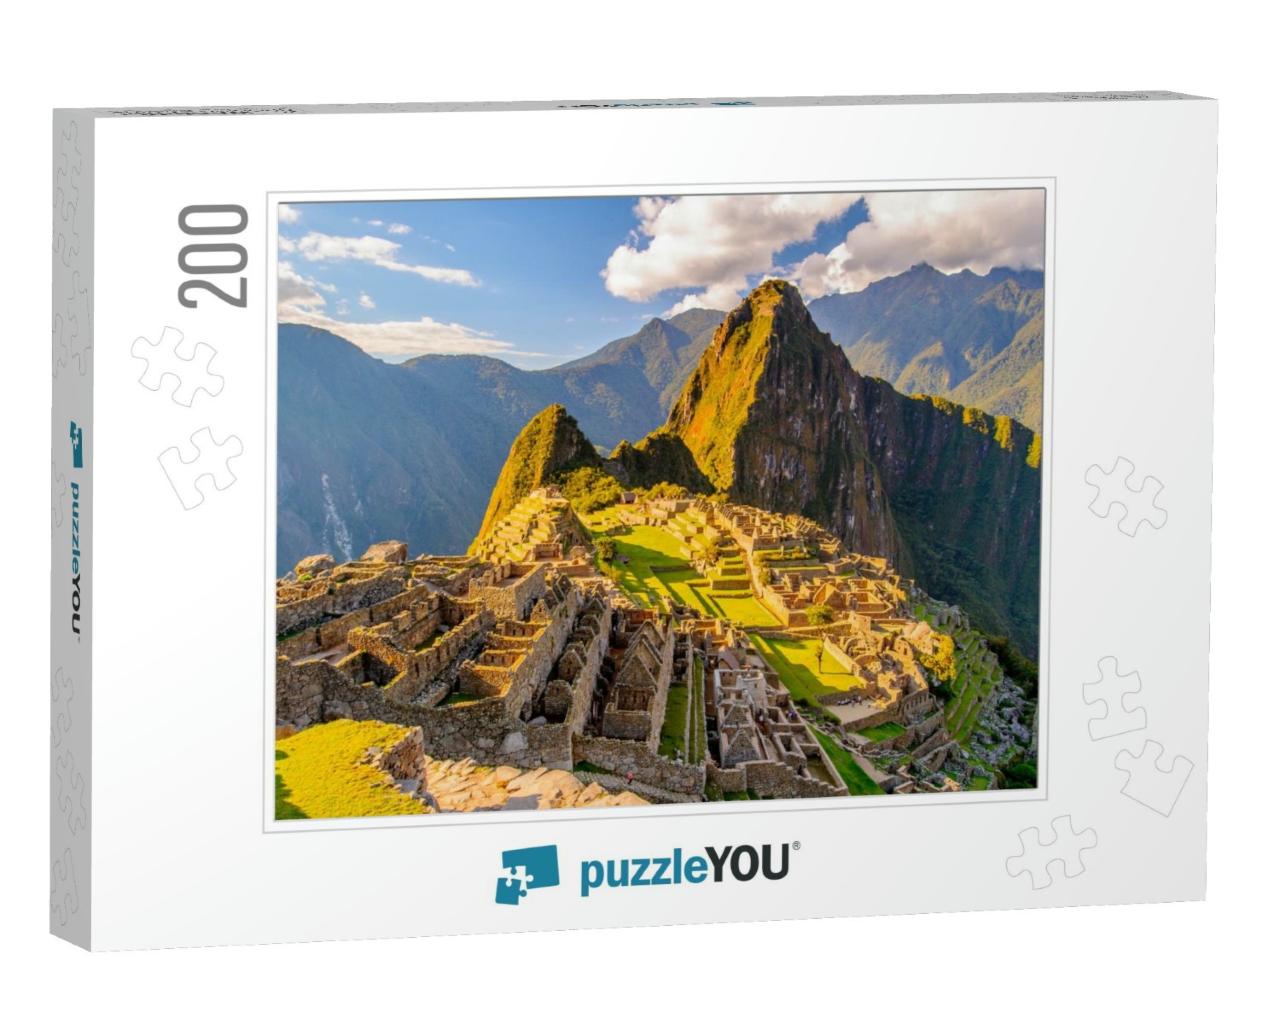 Machu Picchu Peru, Southa America, a UNESCO World Heritag... Jigsaw Puzzle with 200 pieces